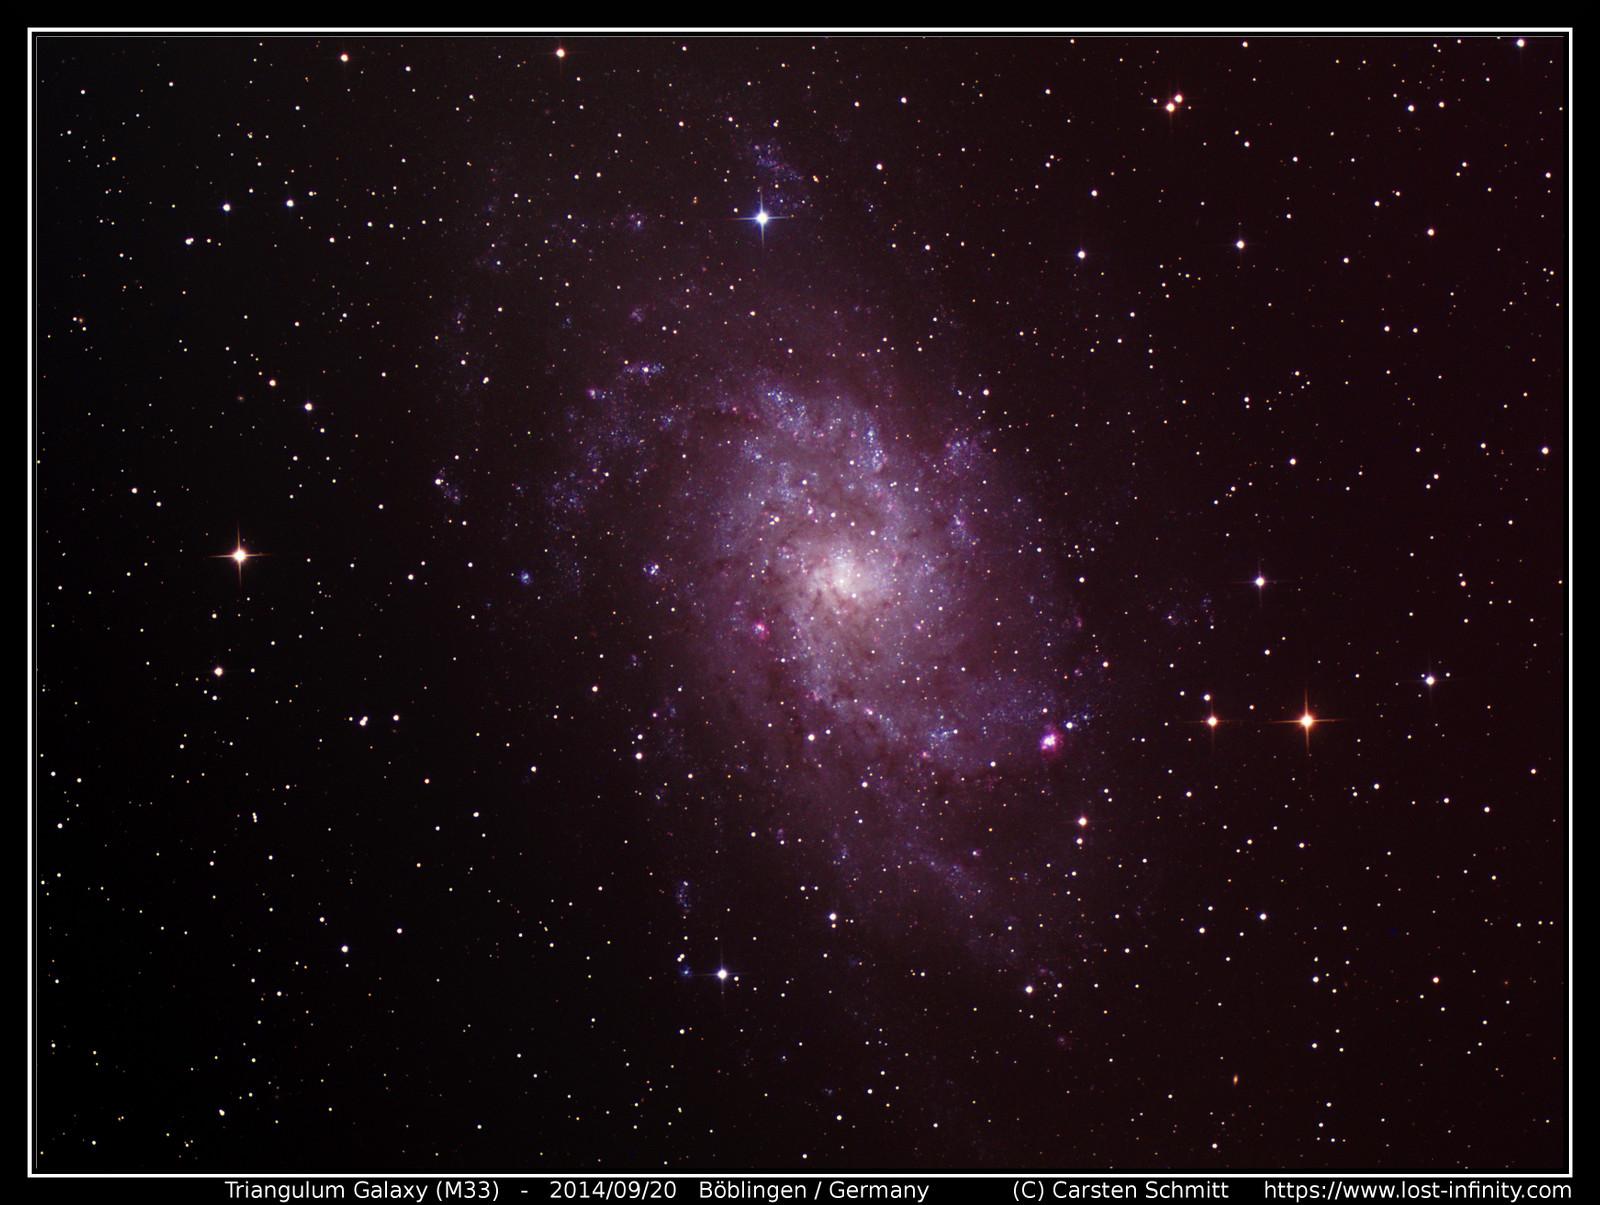 Triangulum Galaxy (M33) - 2014/09/20